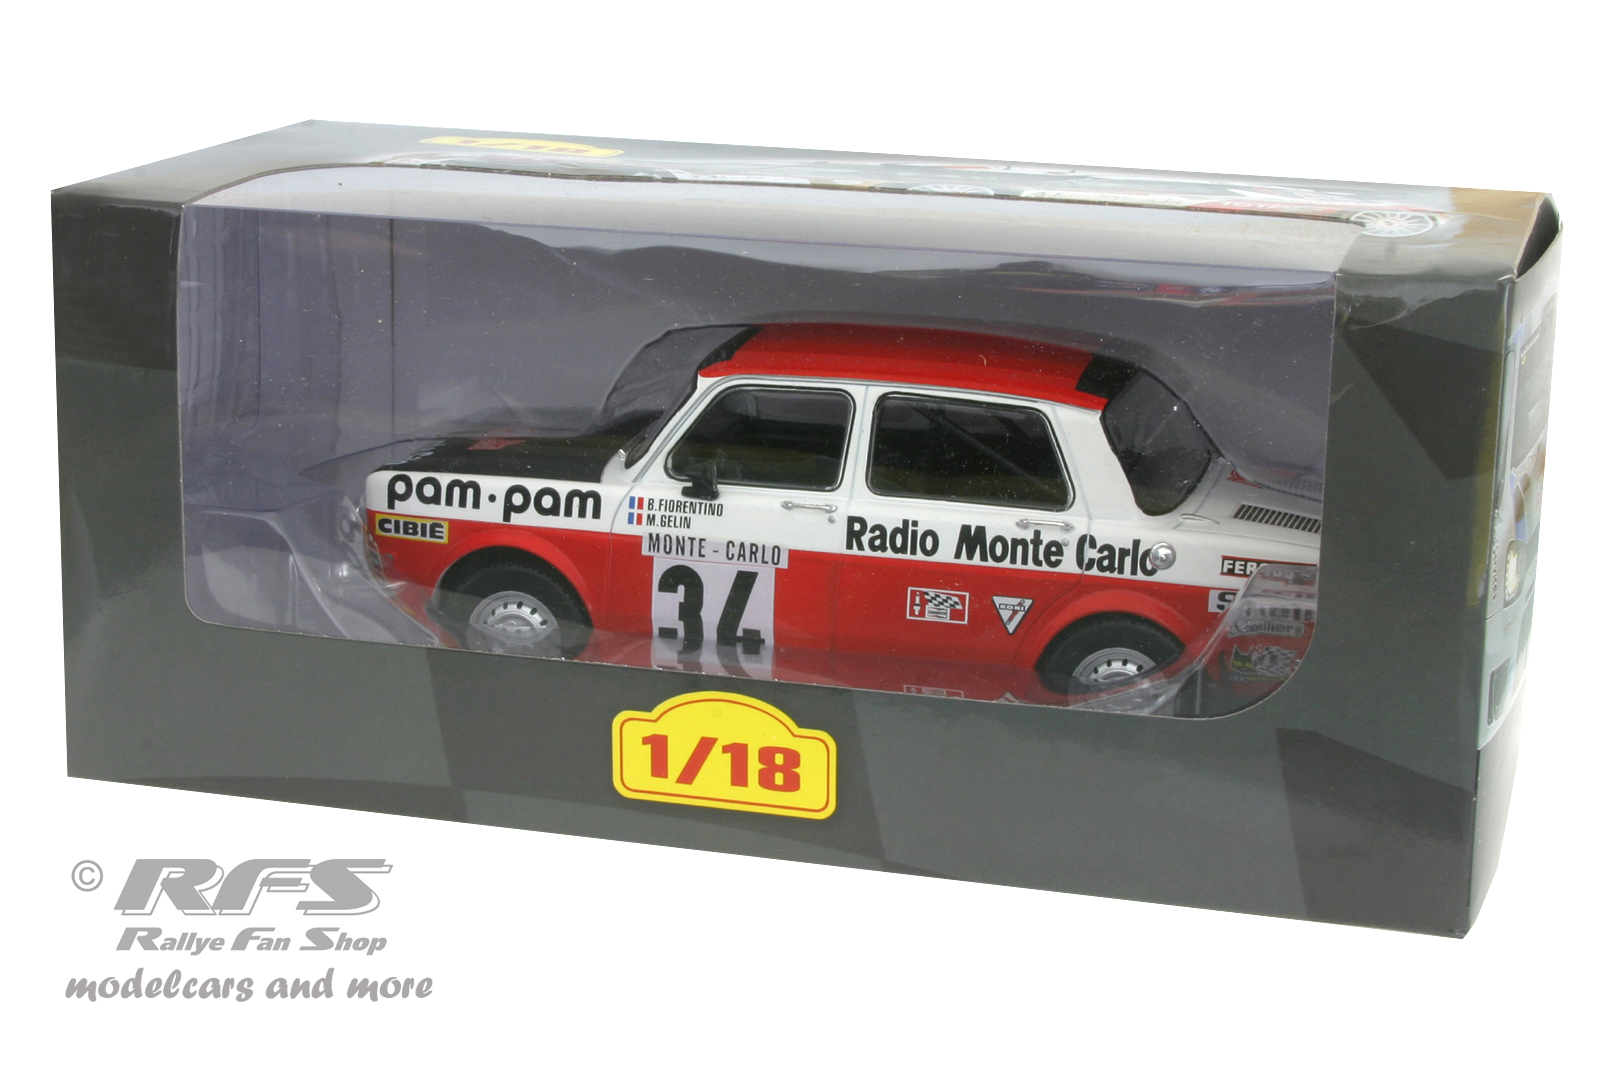 Simca Rallye 2 - Rallye Monte Carlo 1973